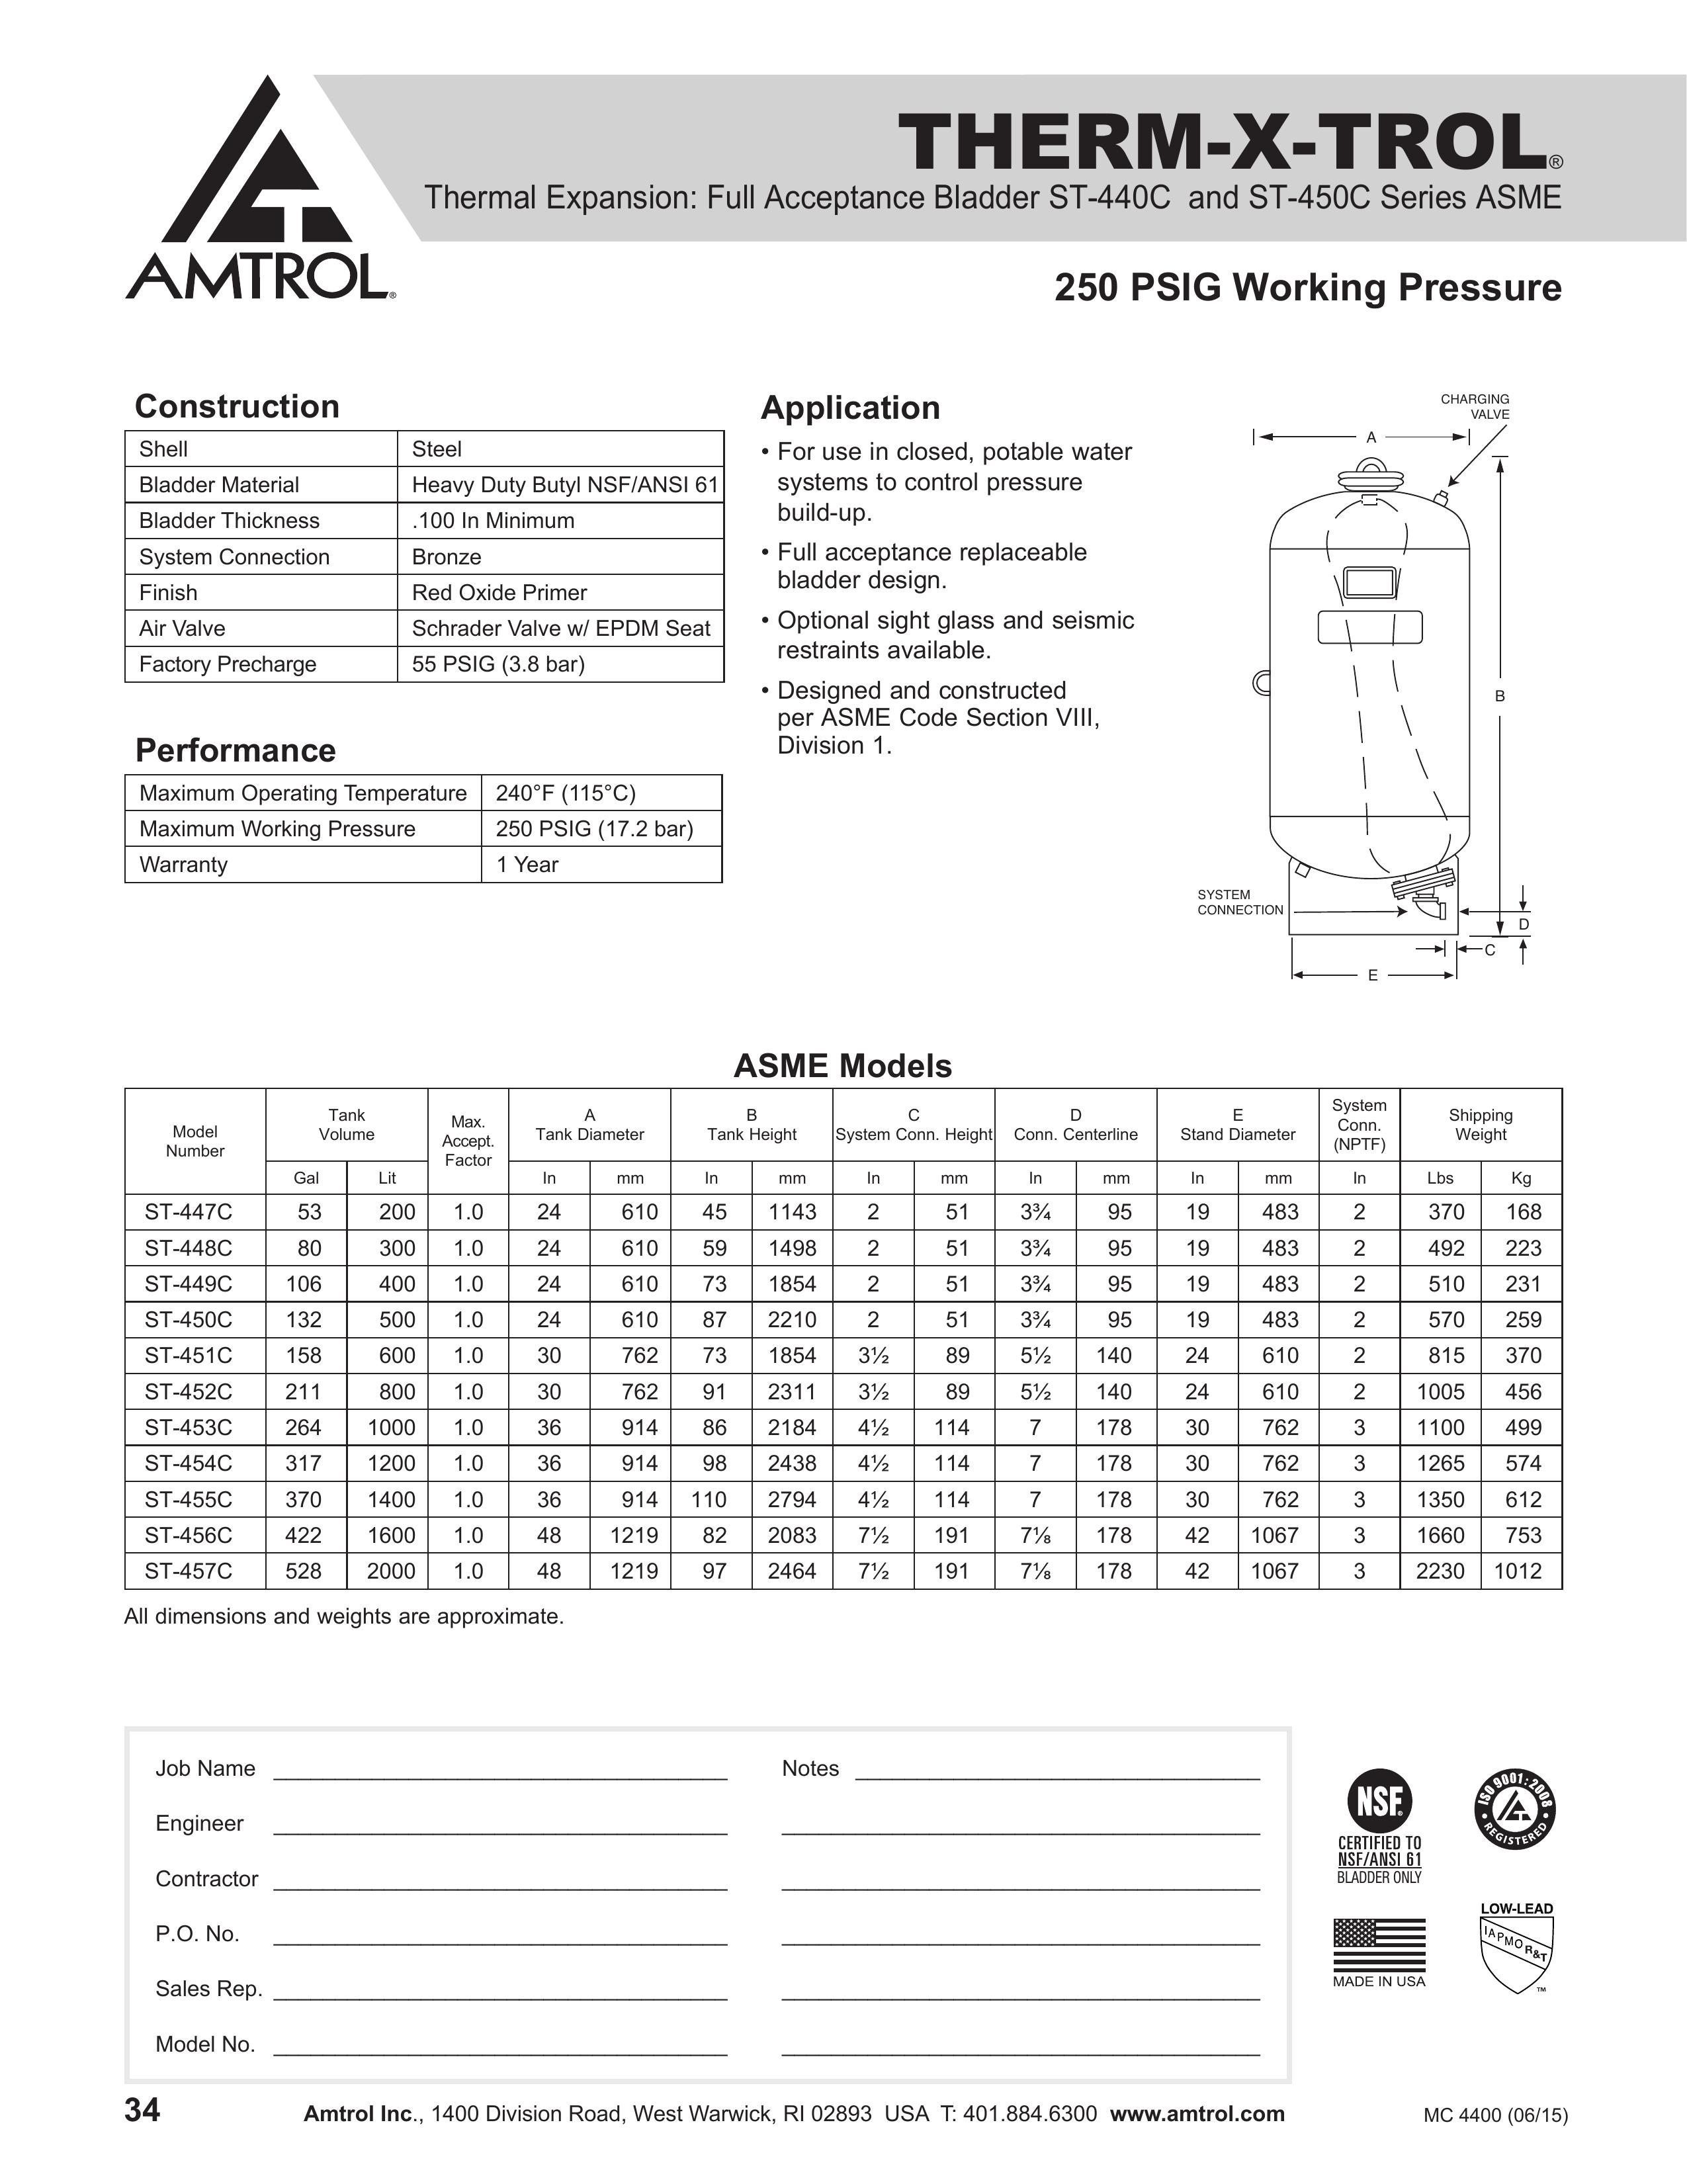 Amtrol ST-454C Slow Cooker User Manual